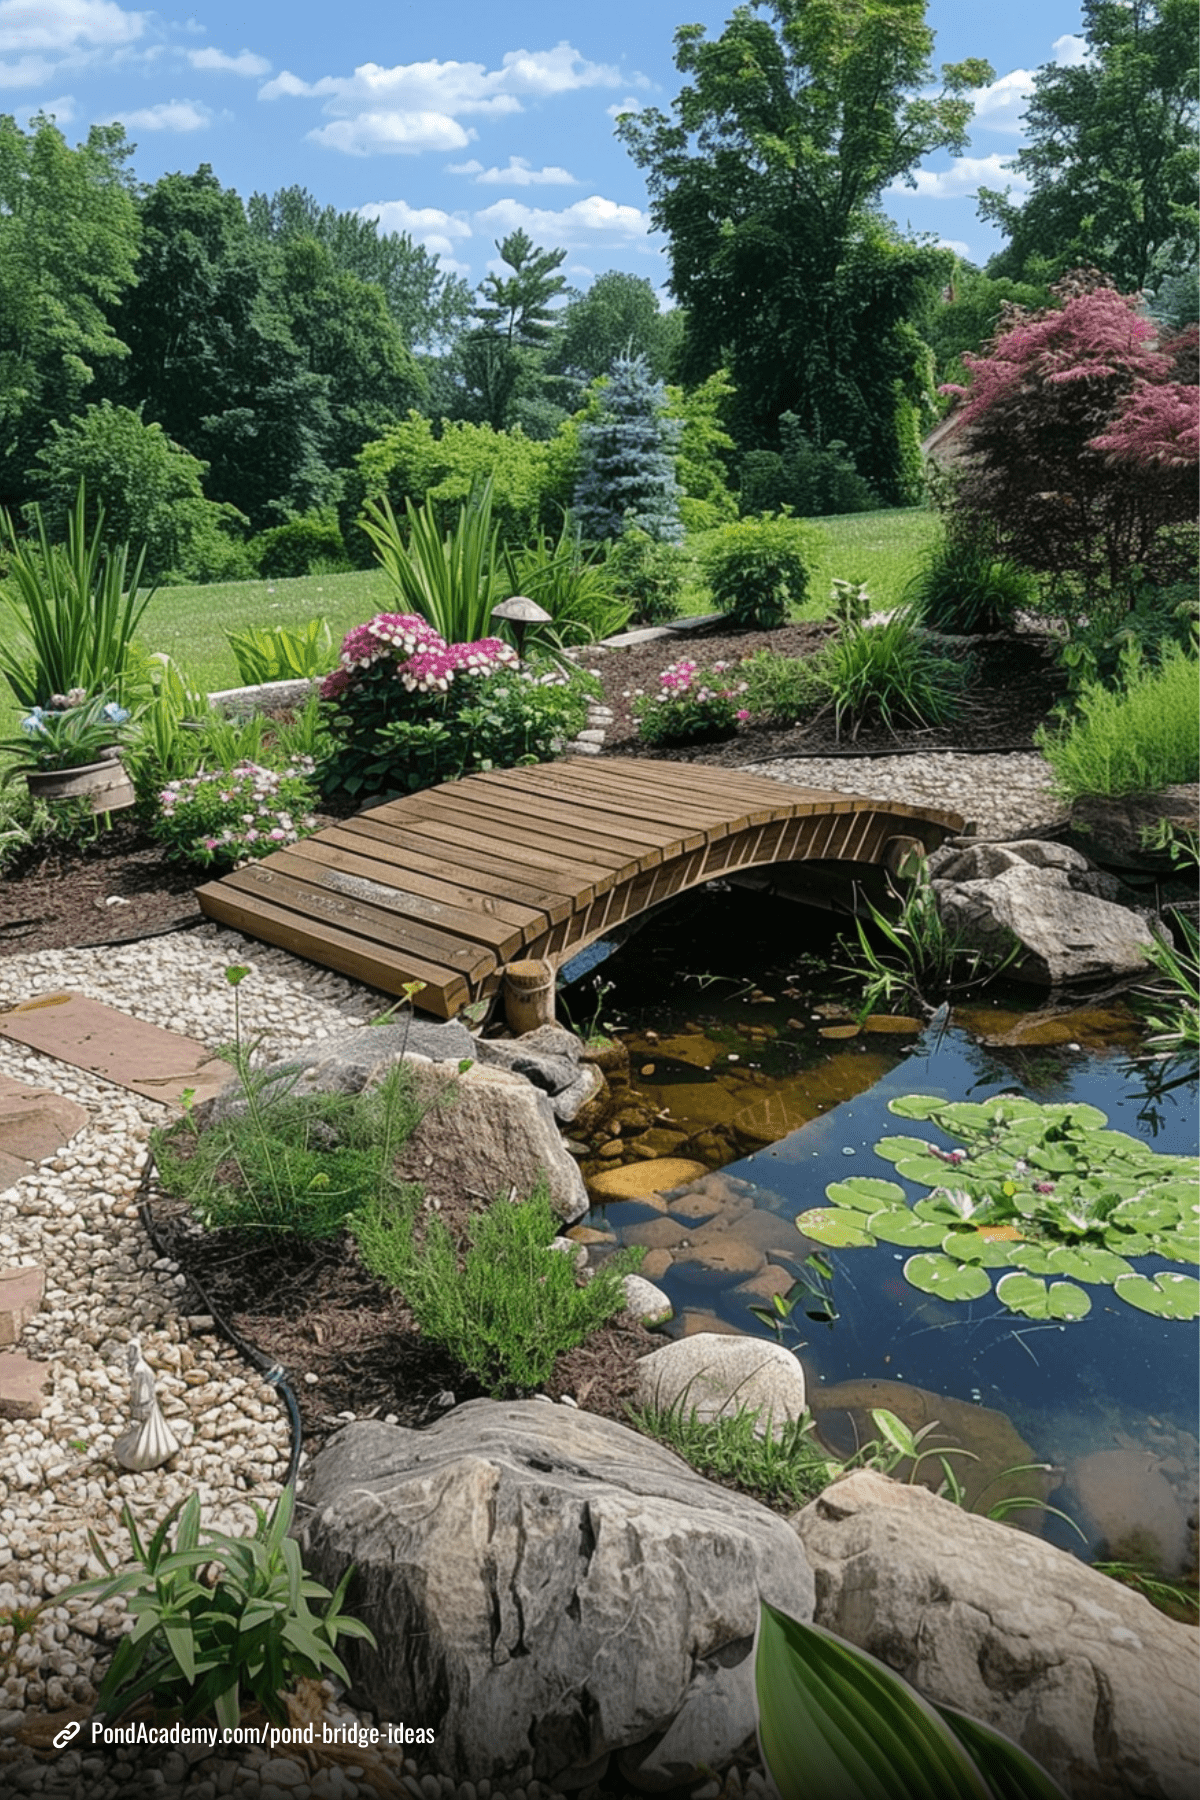 Pond bridge idea 1